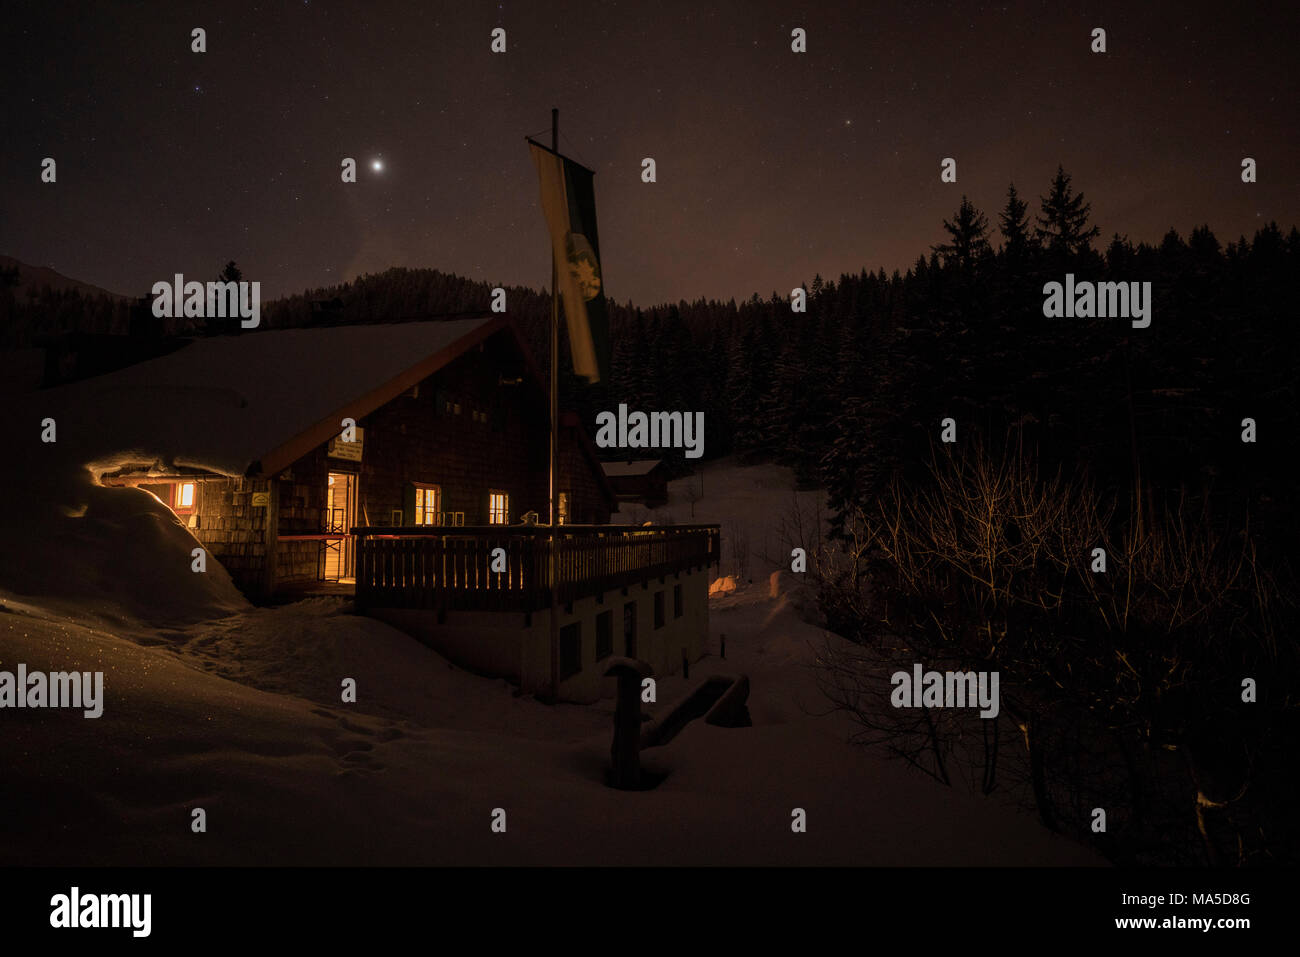 Lenggrieser Hütte (hut) in winter at night, Lenggries, Bavarian Prealps, Bavaria, Germany Stock Photo